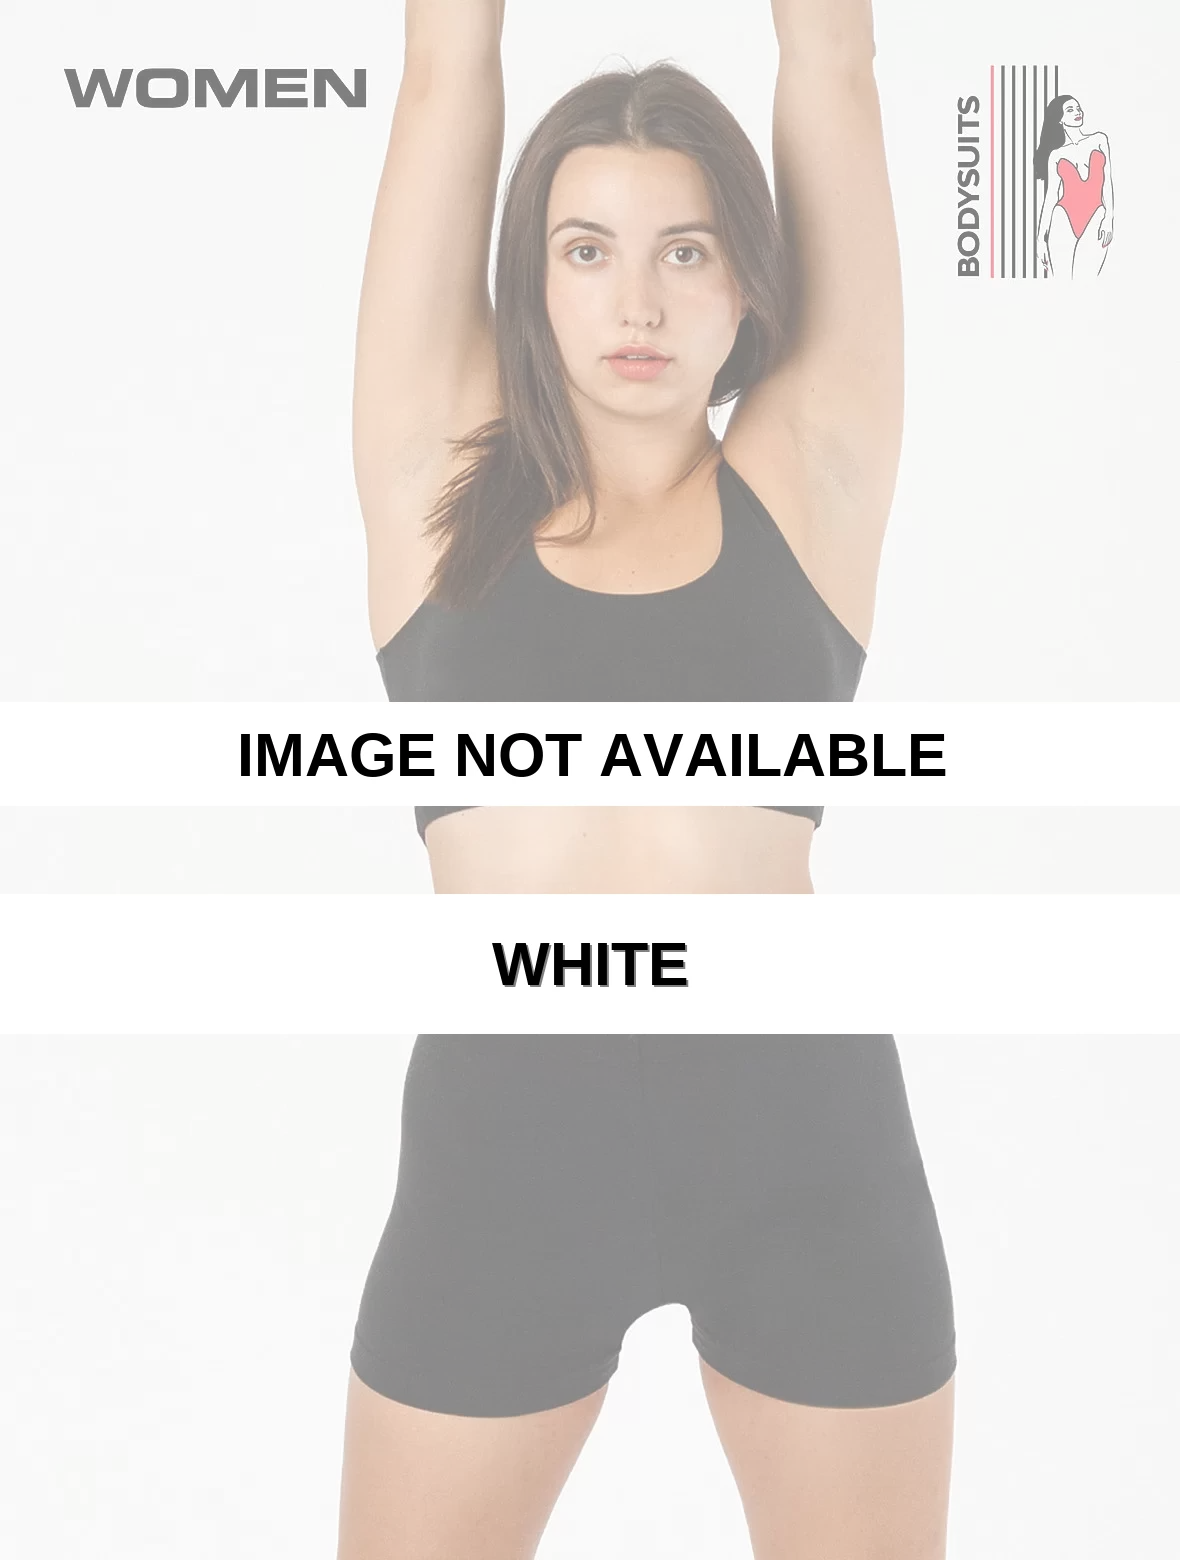 Los Angeles Apparel 8330 Cotton Spandex Short Plain Shorts - From